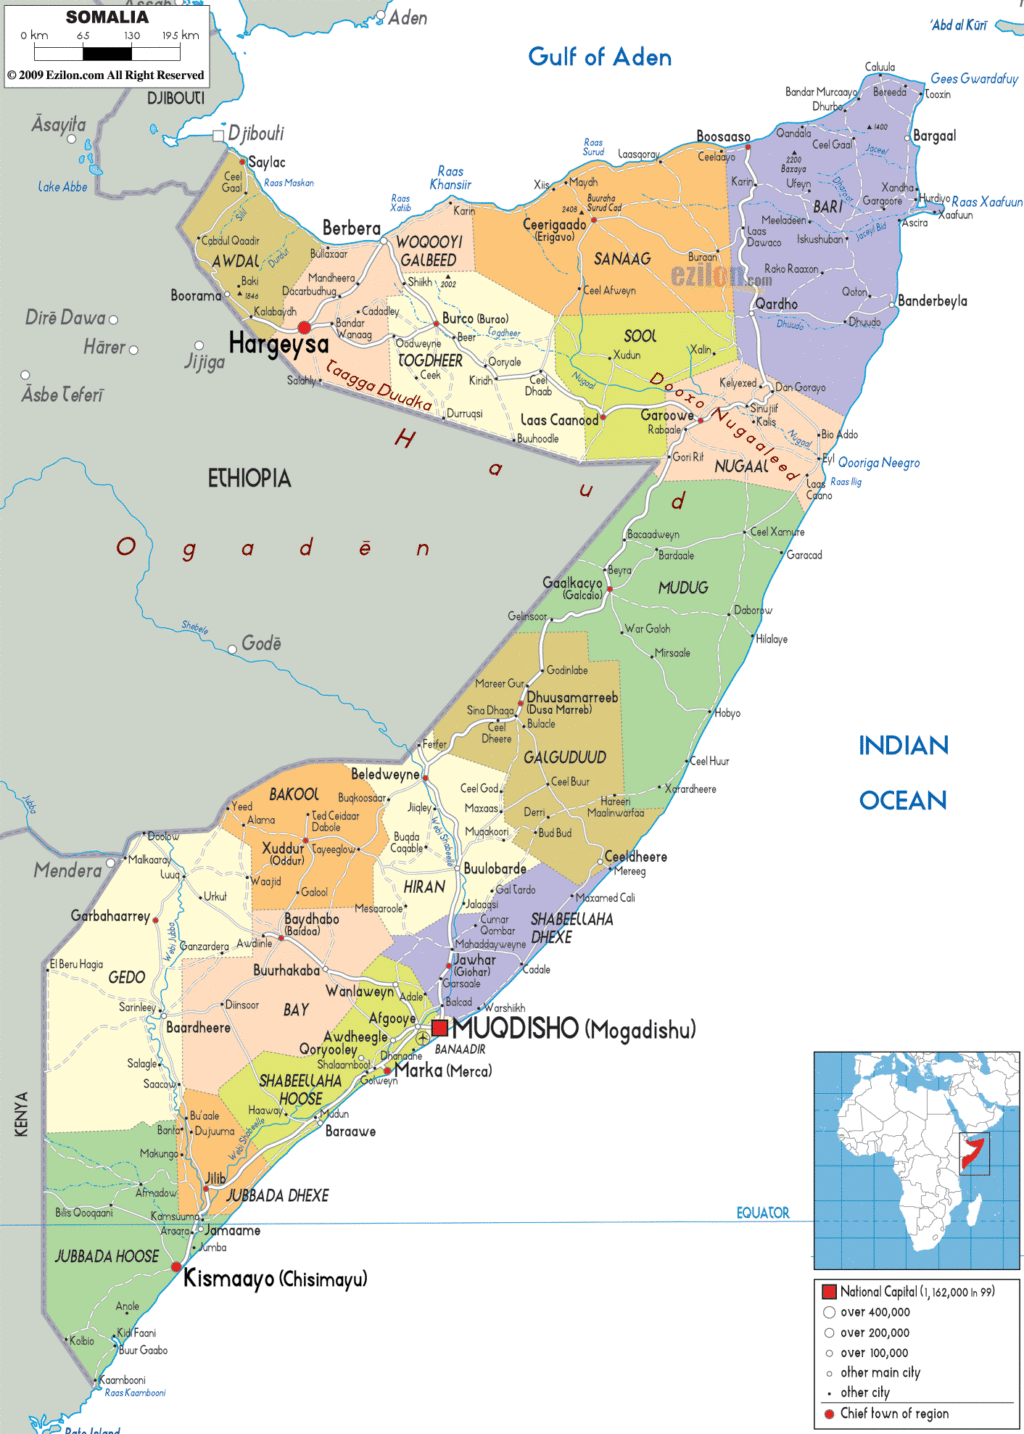 Somalia political map.